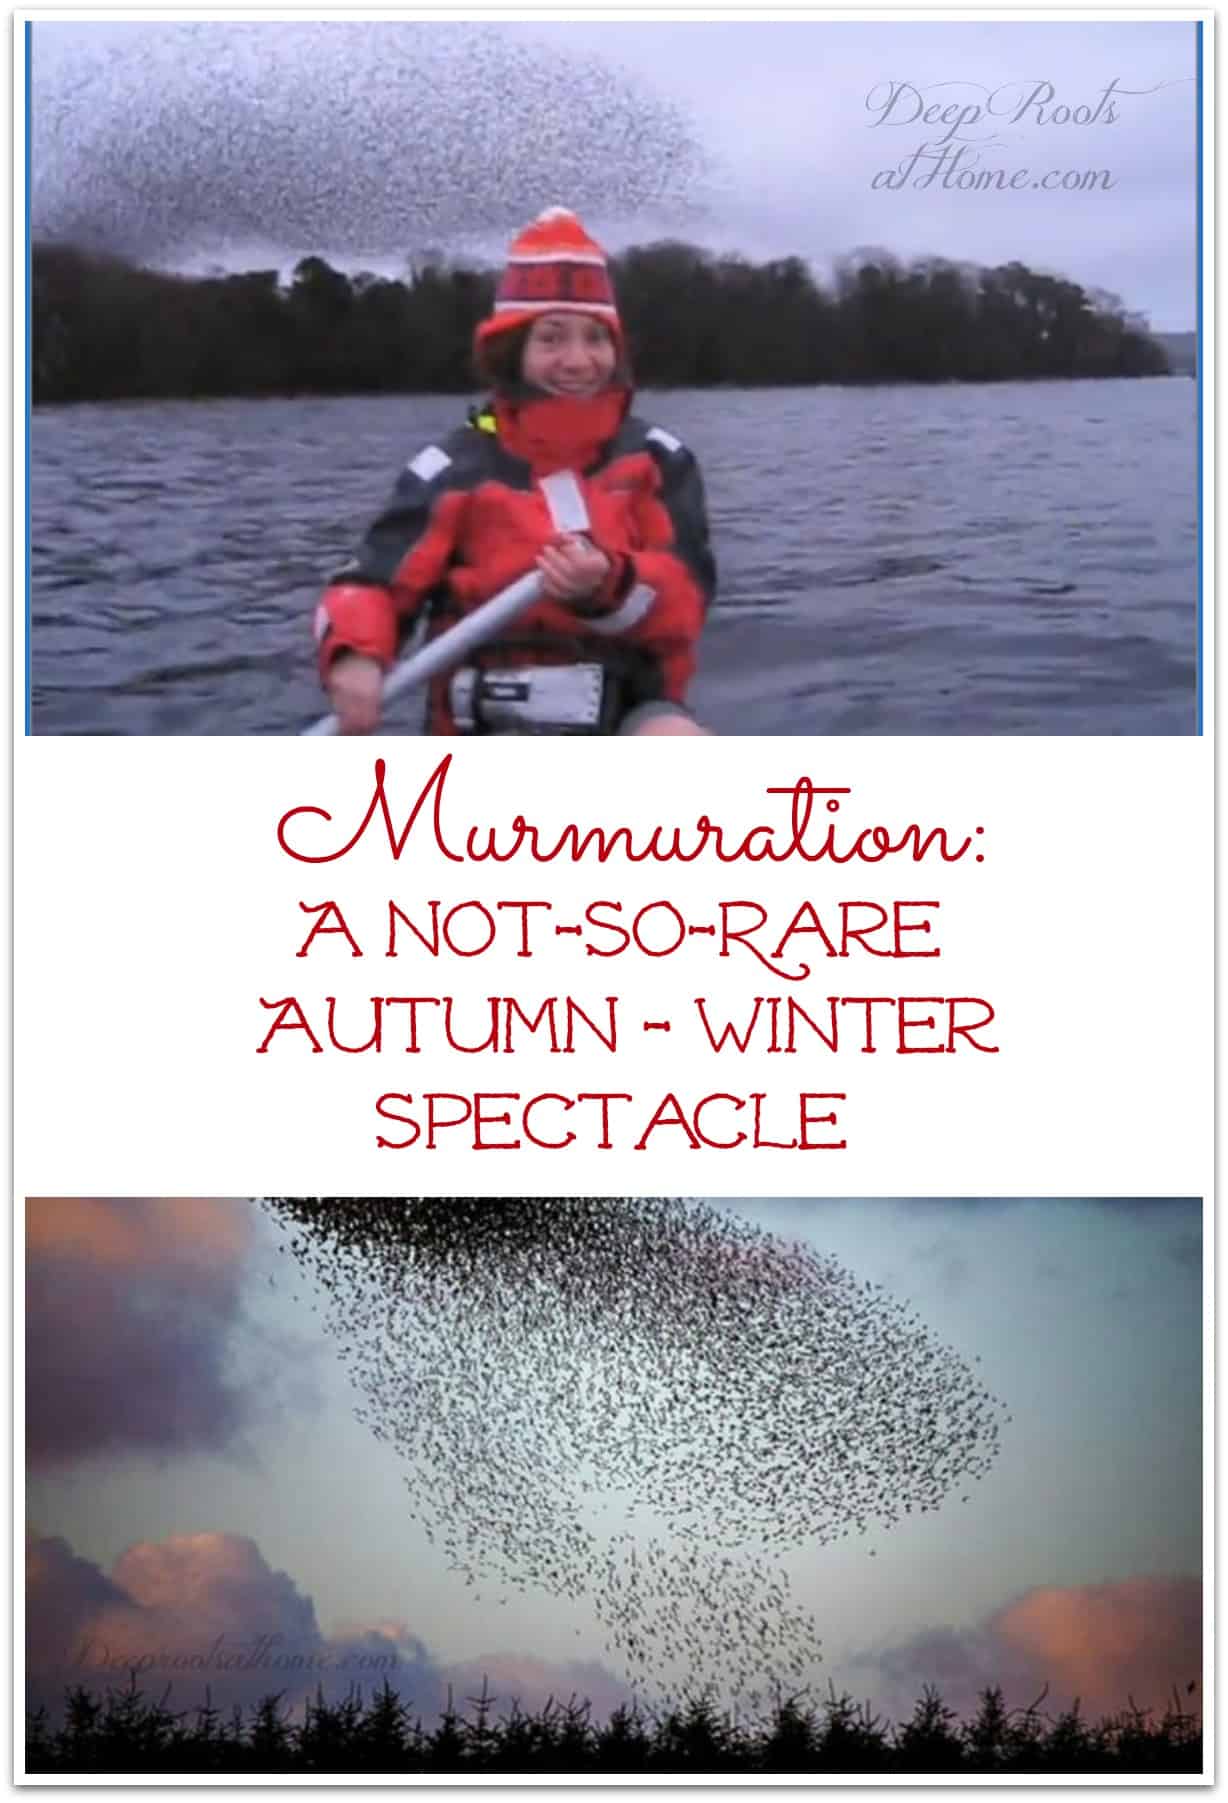 Murmuration: A Not-So-Rare Winter Spectacle. Starling behavior, a bird phenomenon.